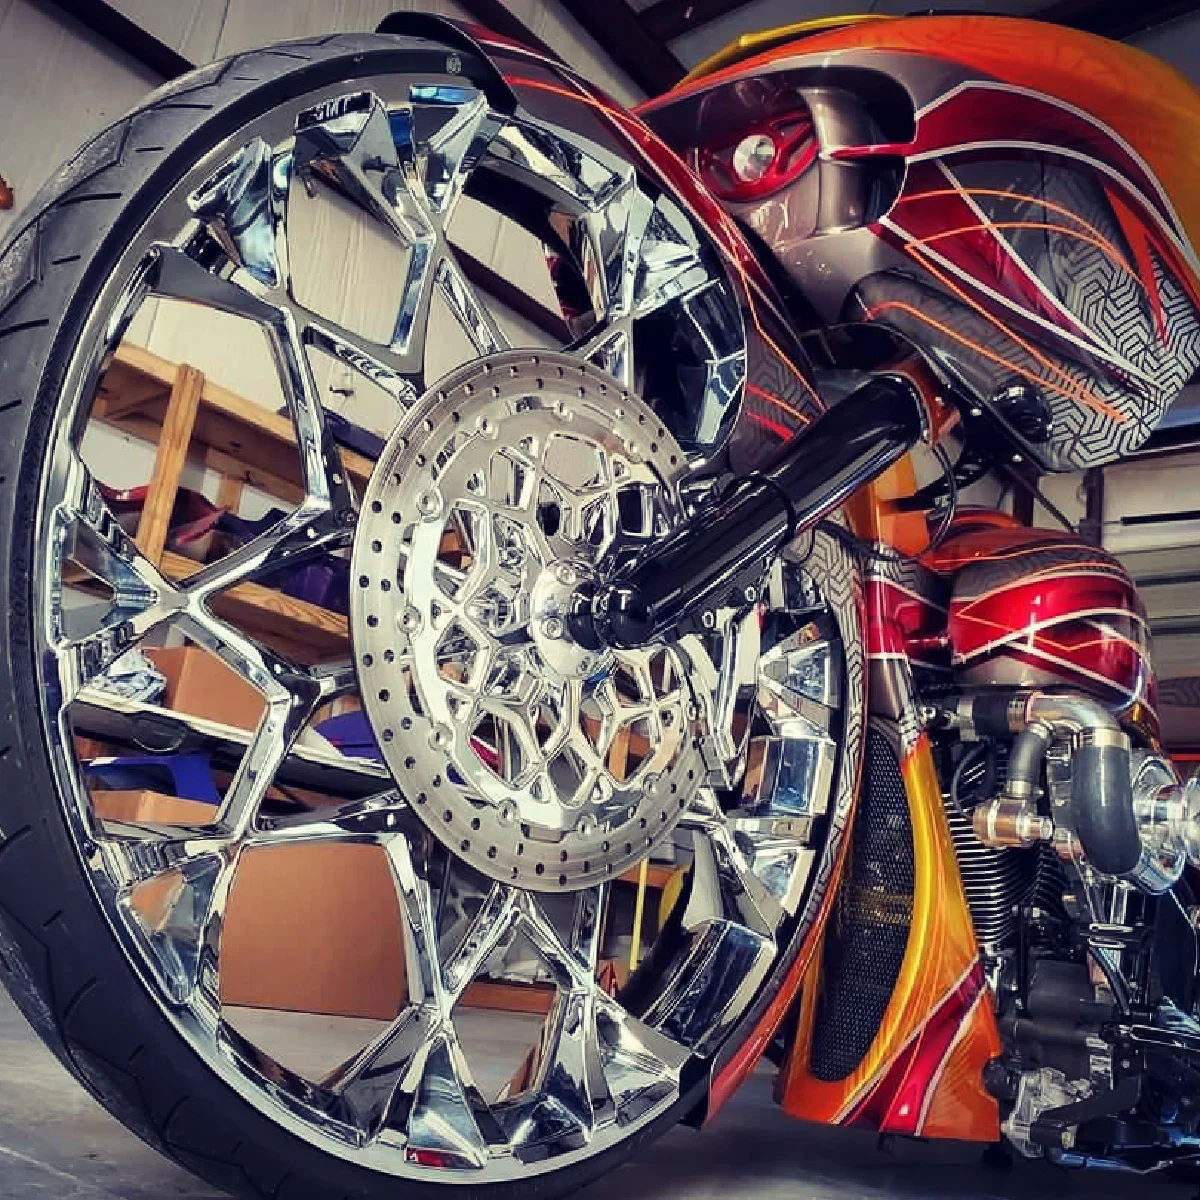 SMT Custom Harley Torque 3D Chrome Bagger Road Glide Wheel with 18" rotor